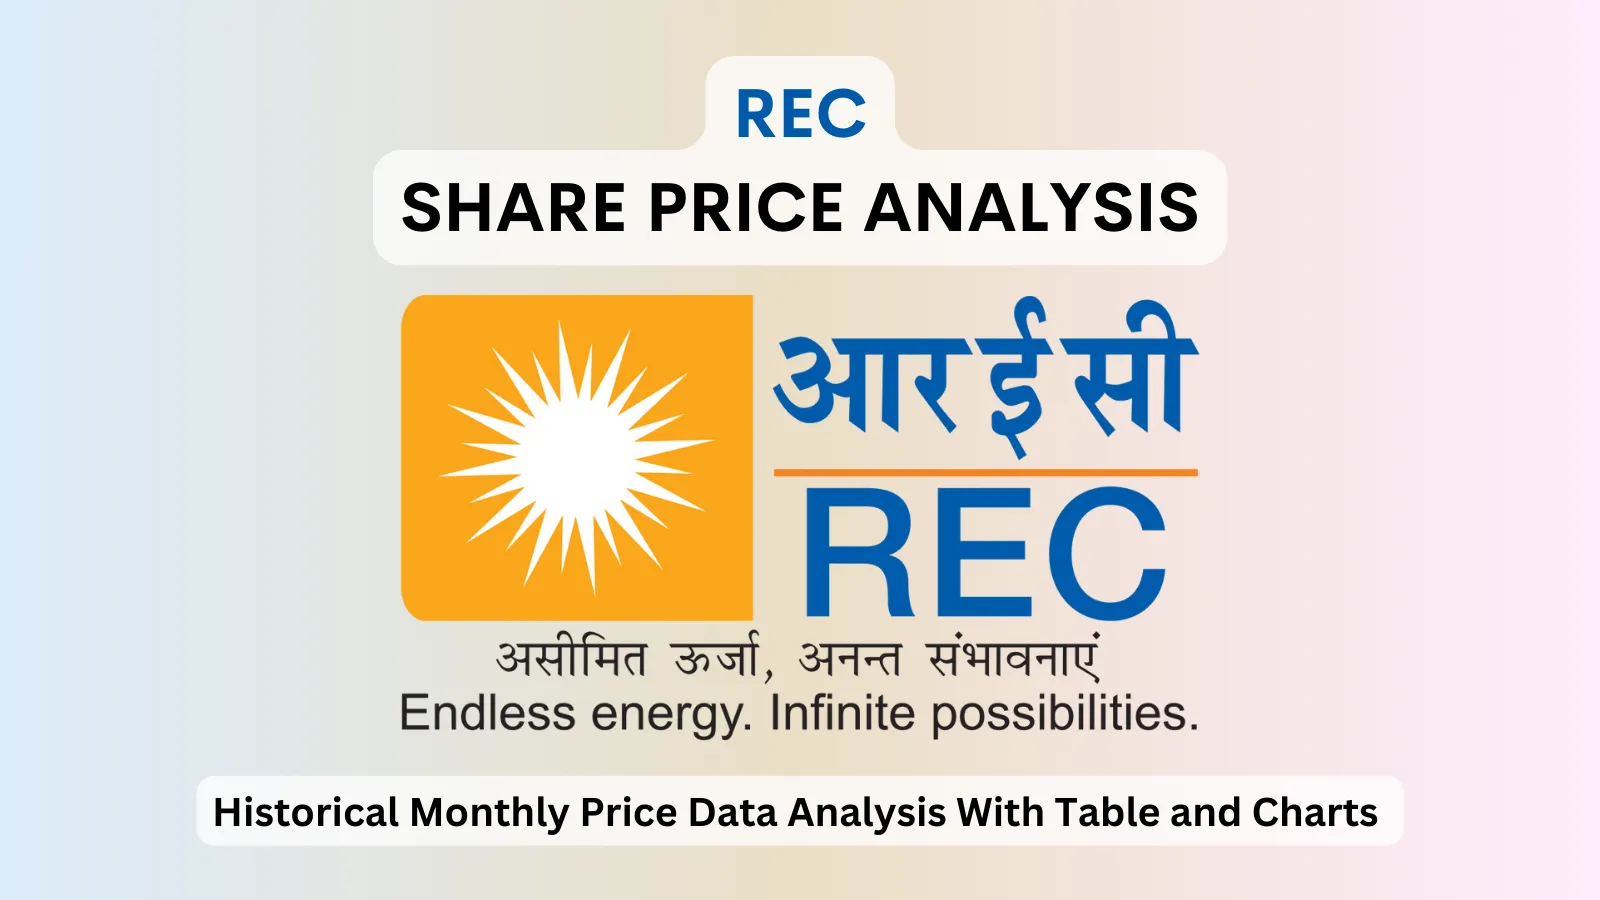 REC share price analysis